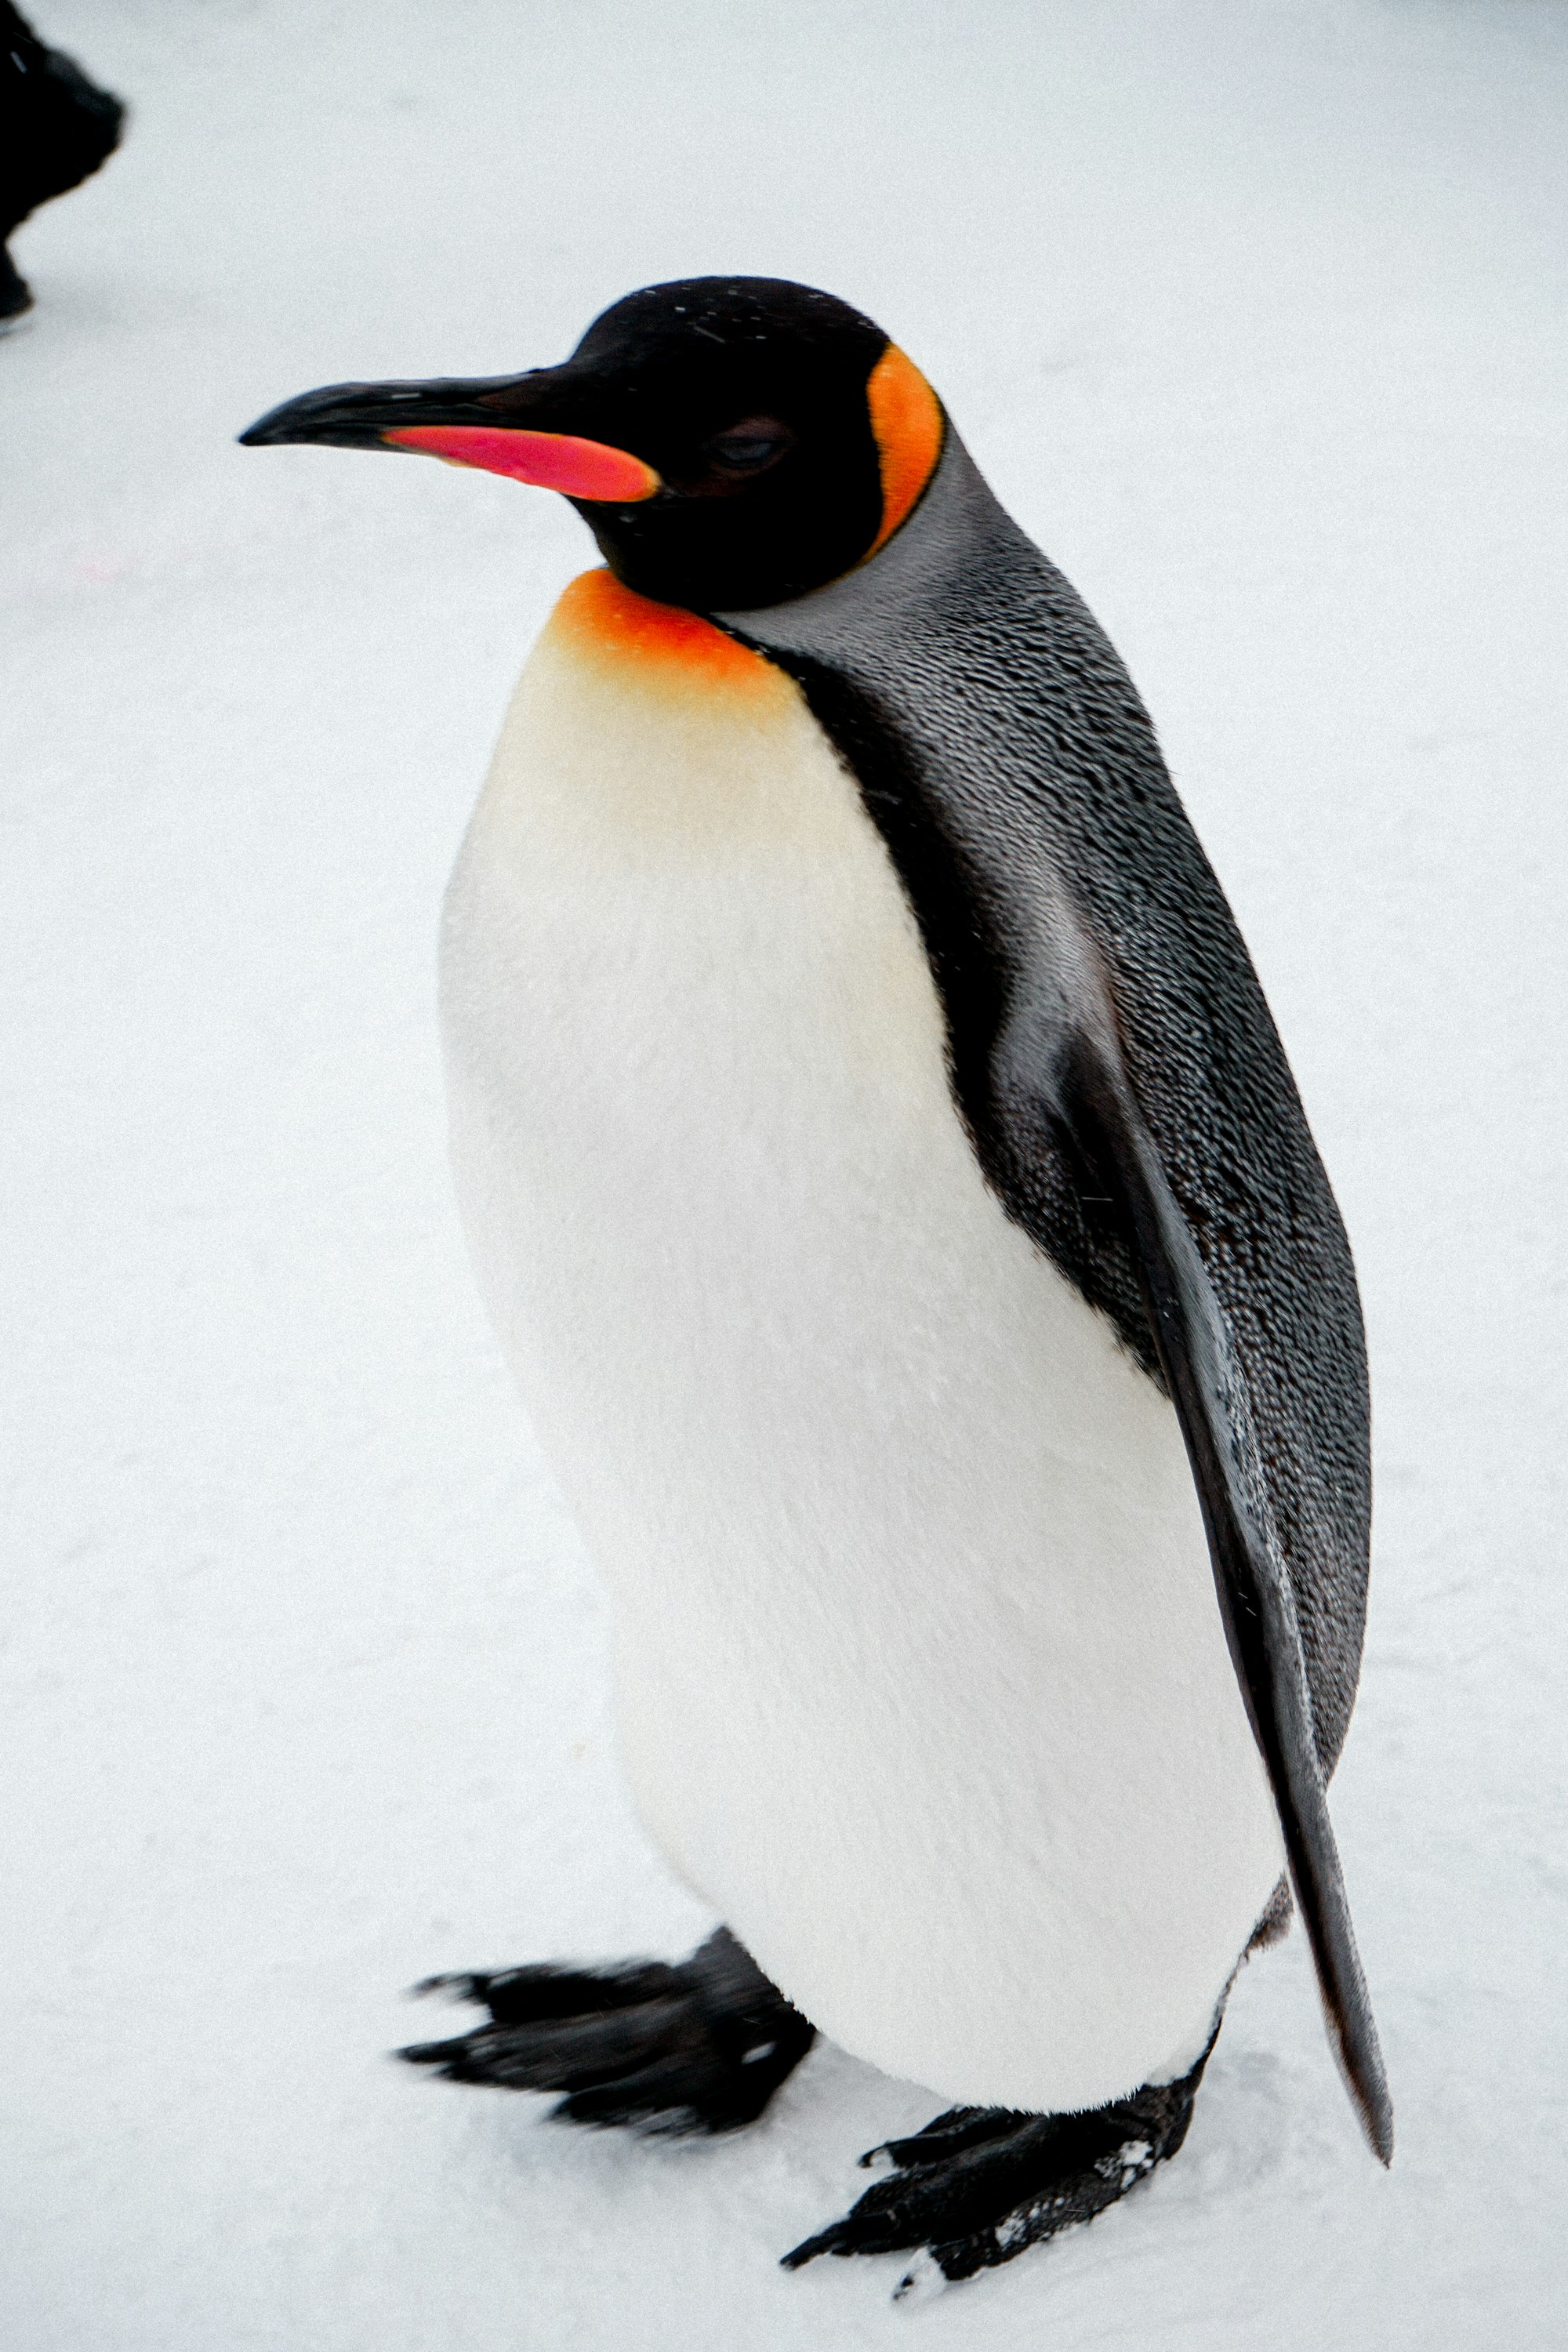 Snow penguin in Hokkaido, Japan